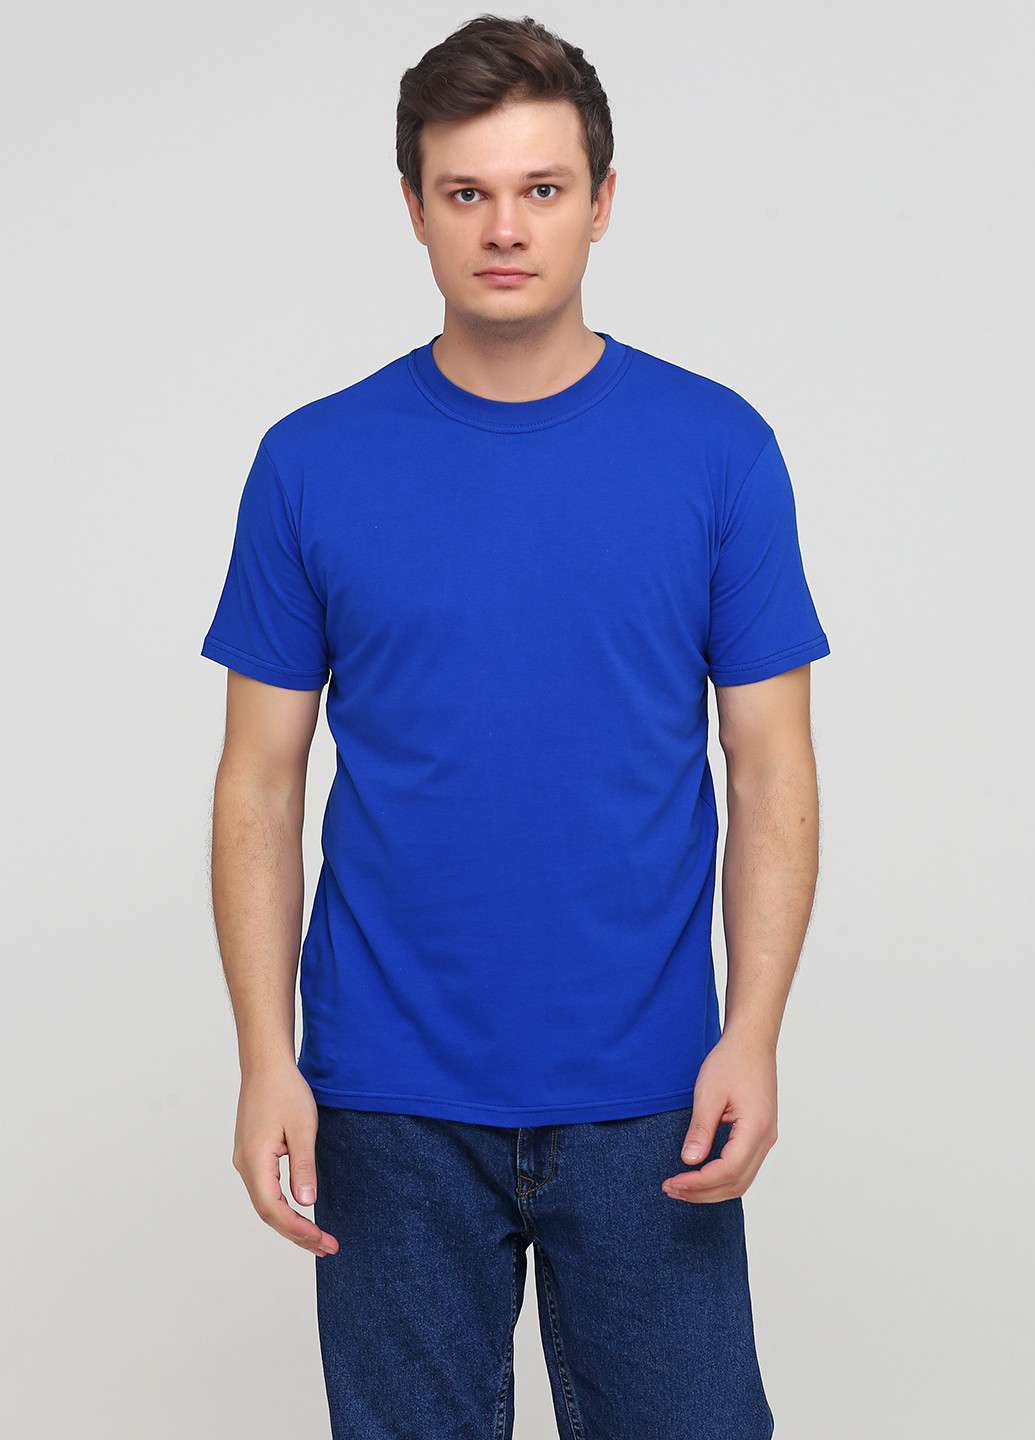 Синяя футболка мужская 19м319-17 синяя(електро) с коротким рукавом Malta